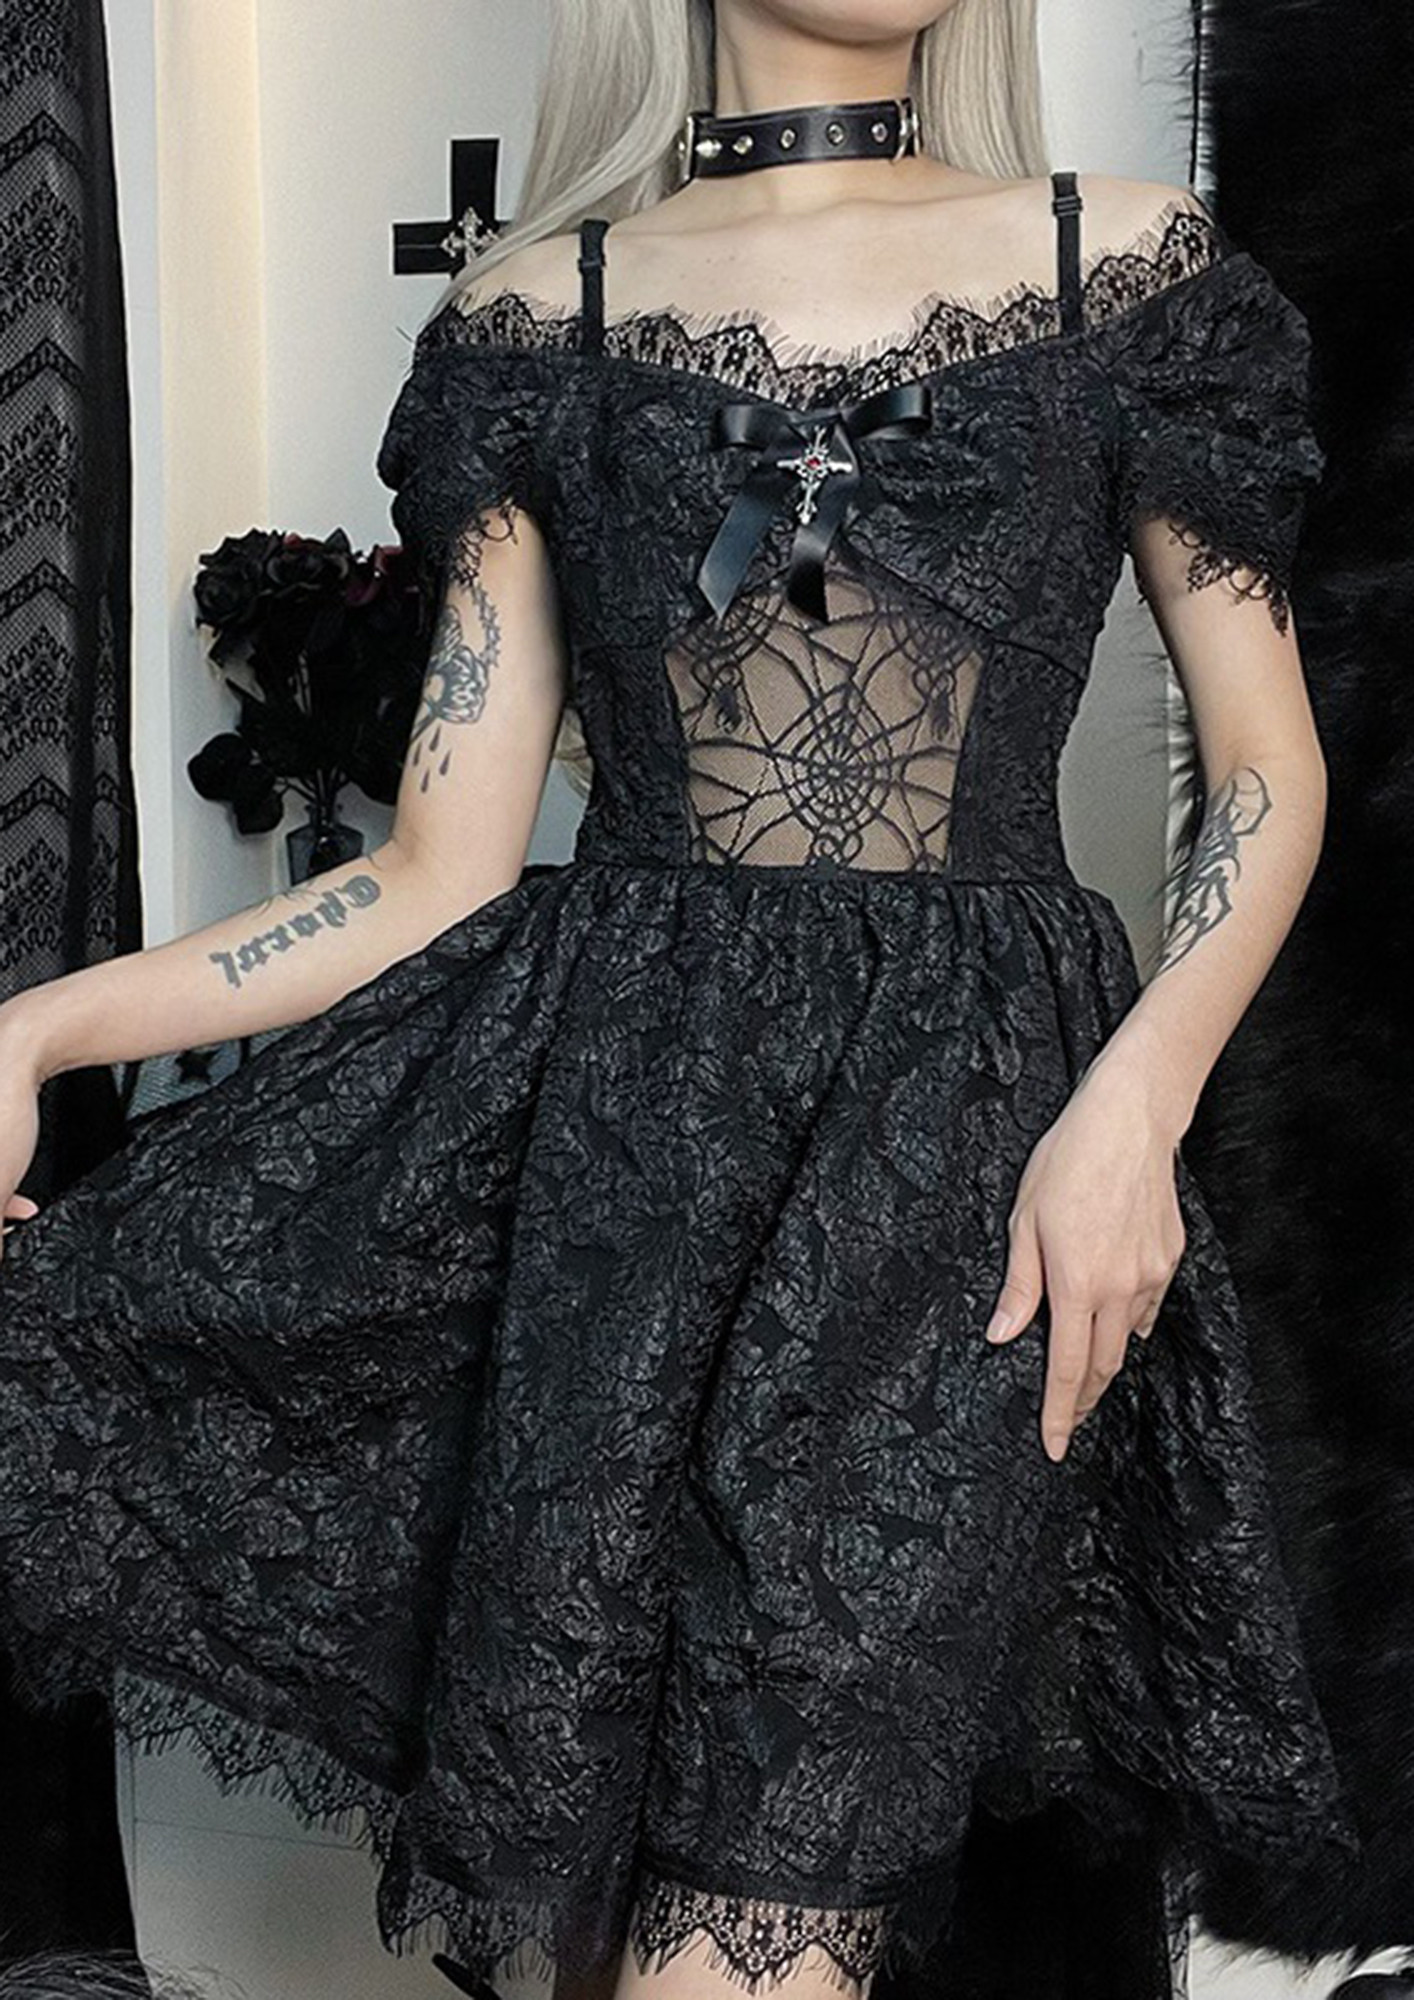 Women Gothic Lolita Dress Japanese Style Fashion Black Goth